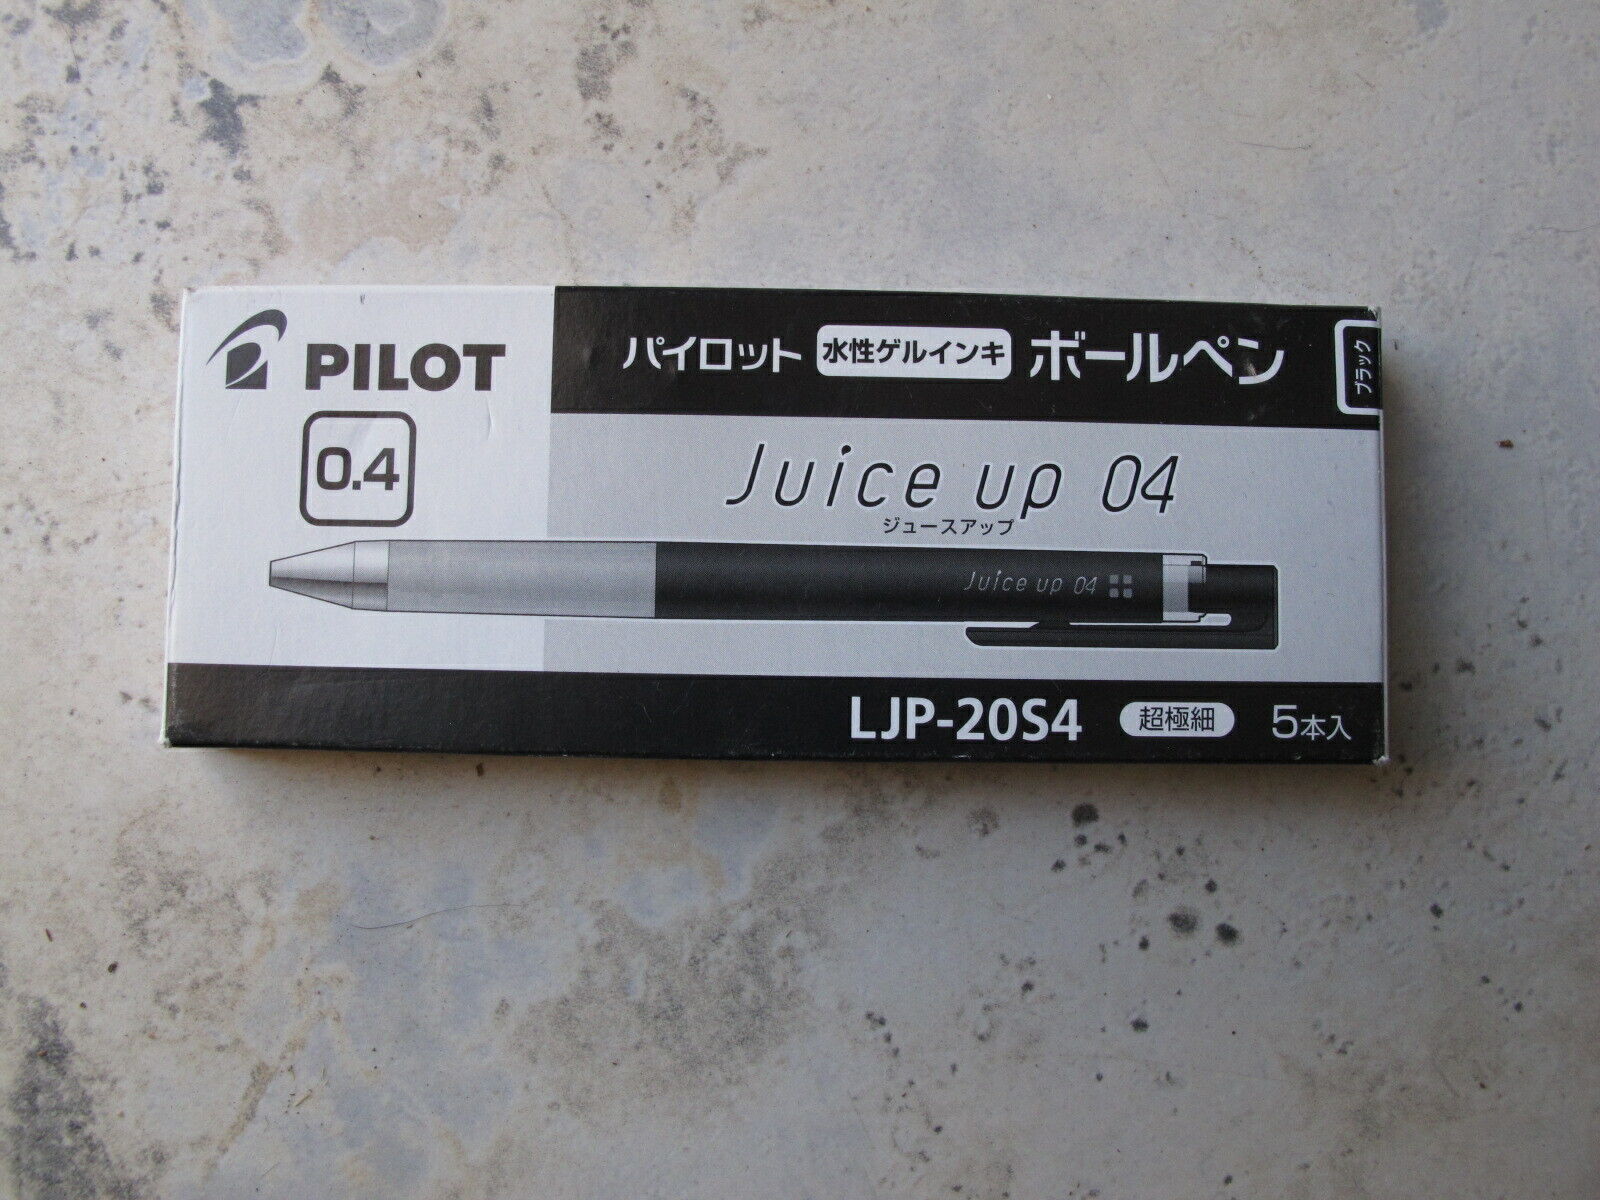 Pilot Juice Up Gel Rollerball Pen - 0.4 mm - Black - Lot of (4) Pilot LJP-20S4